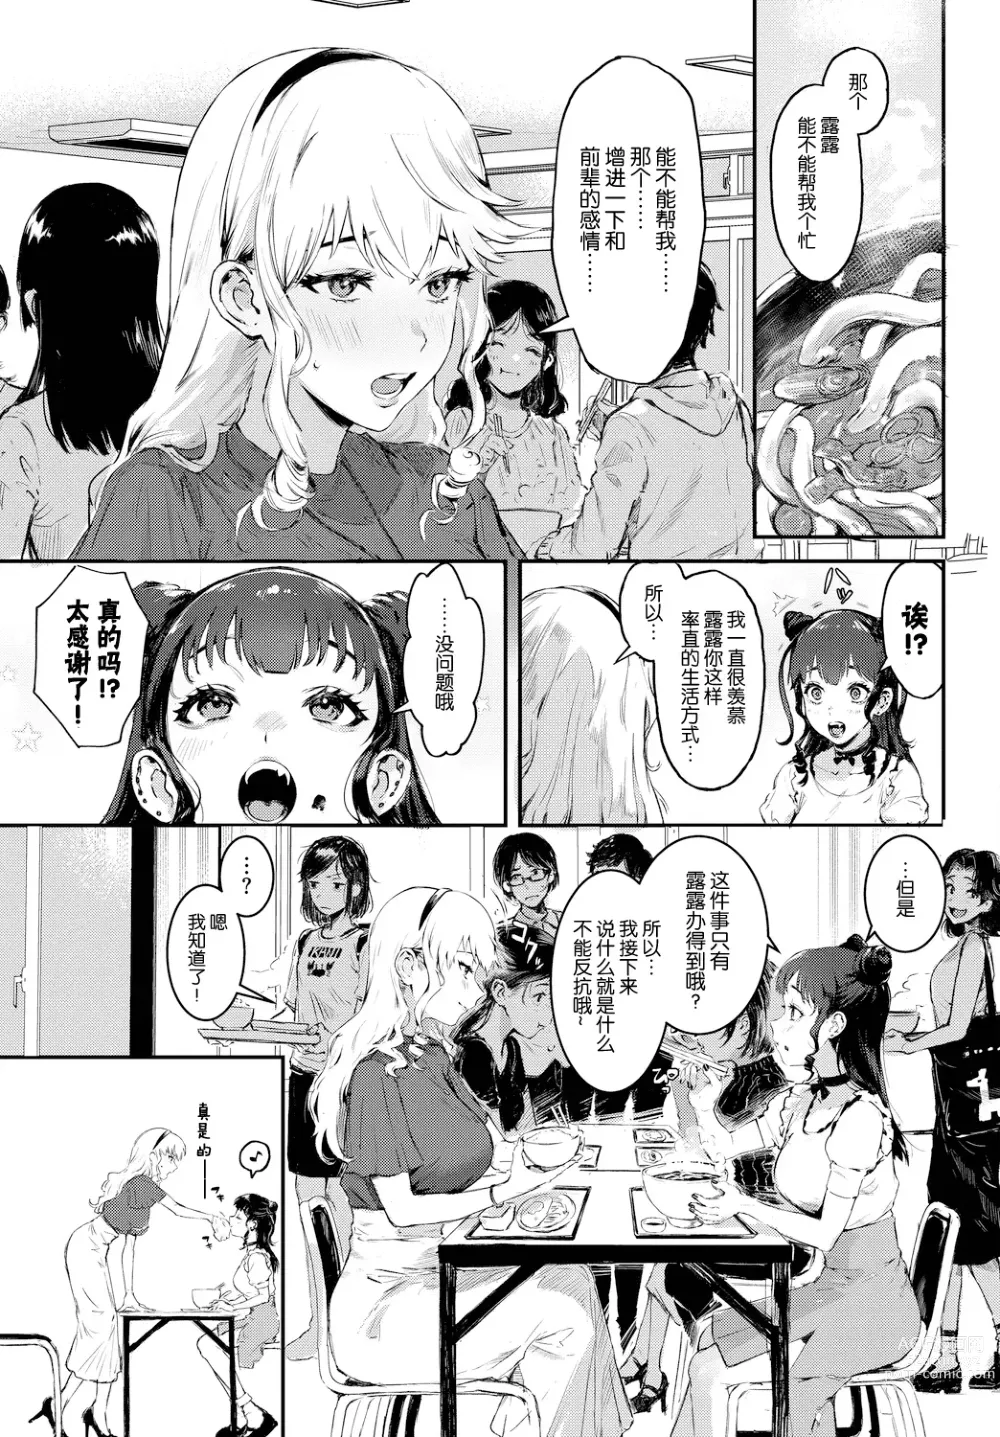 Page 5 of manga Tsuyogari Complex